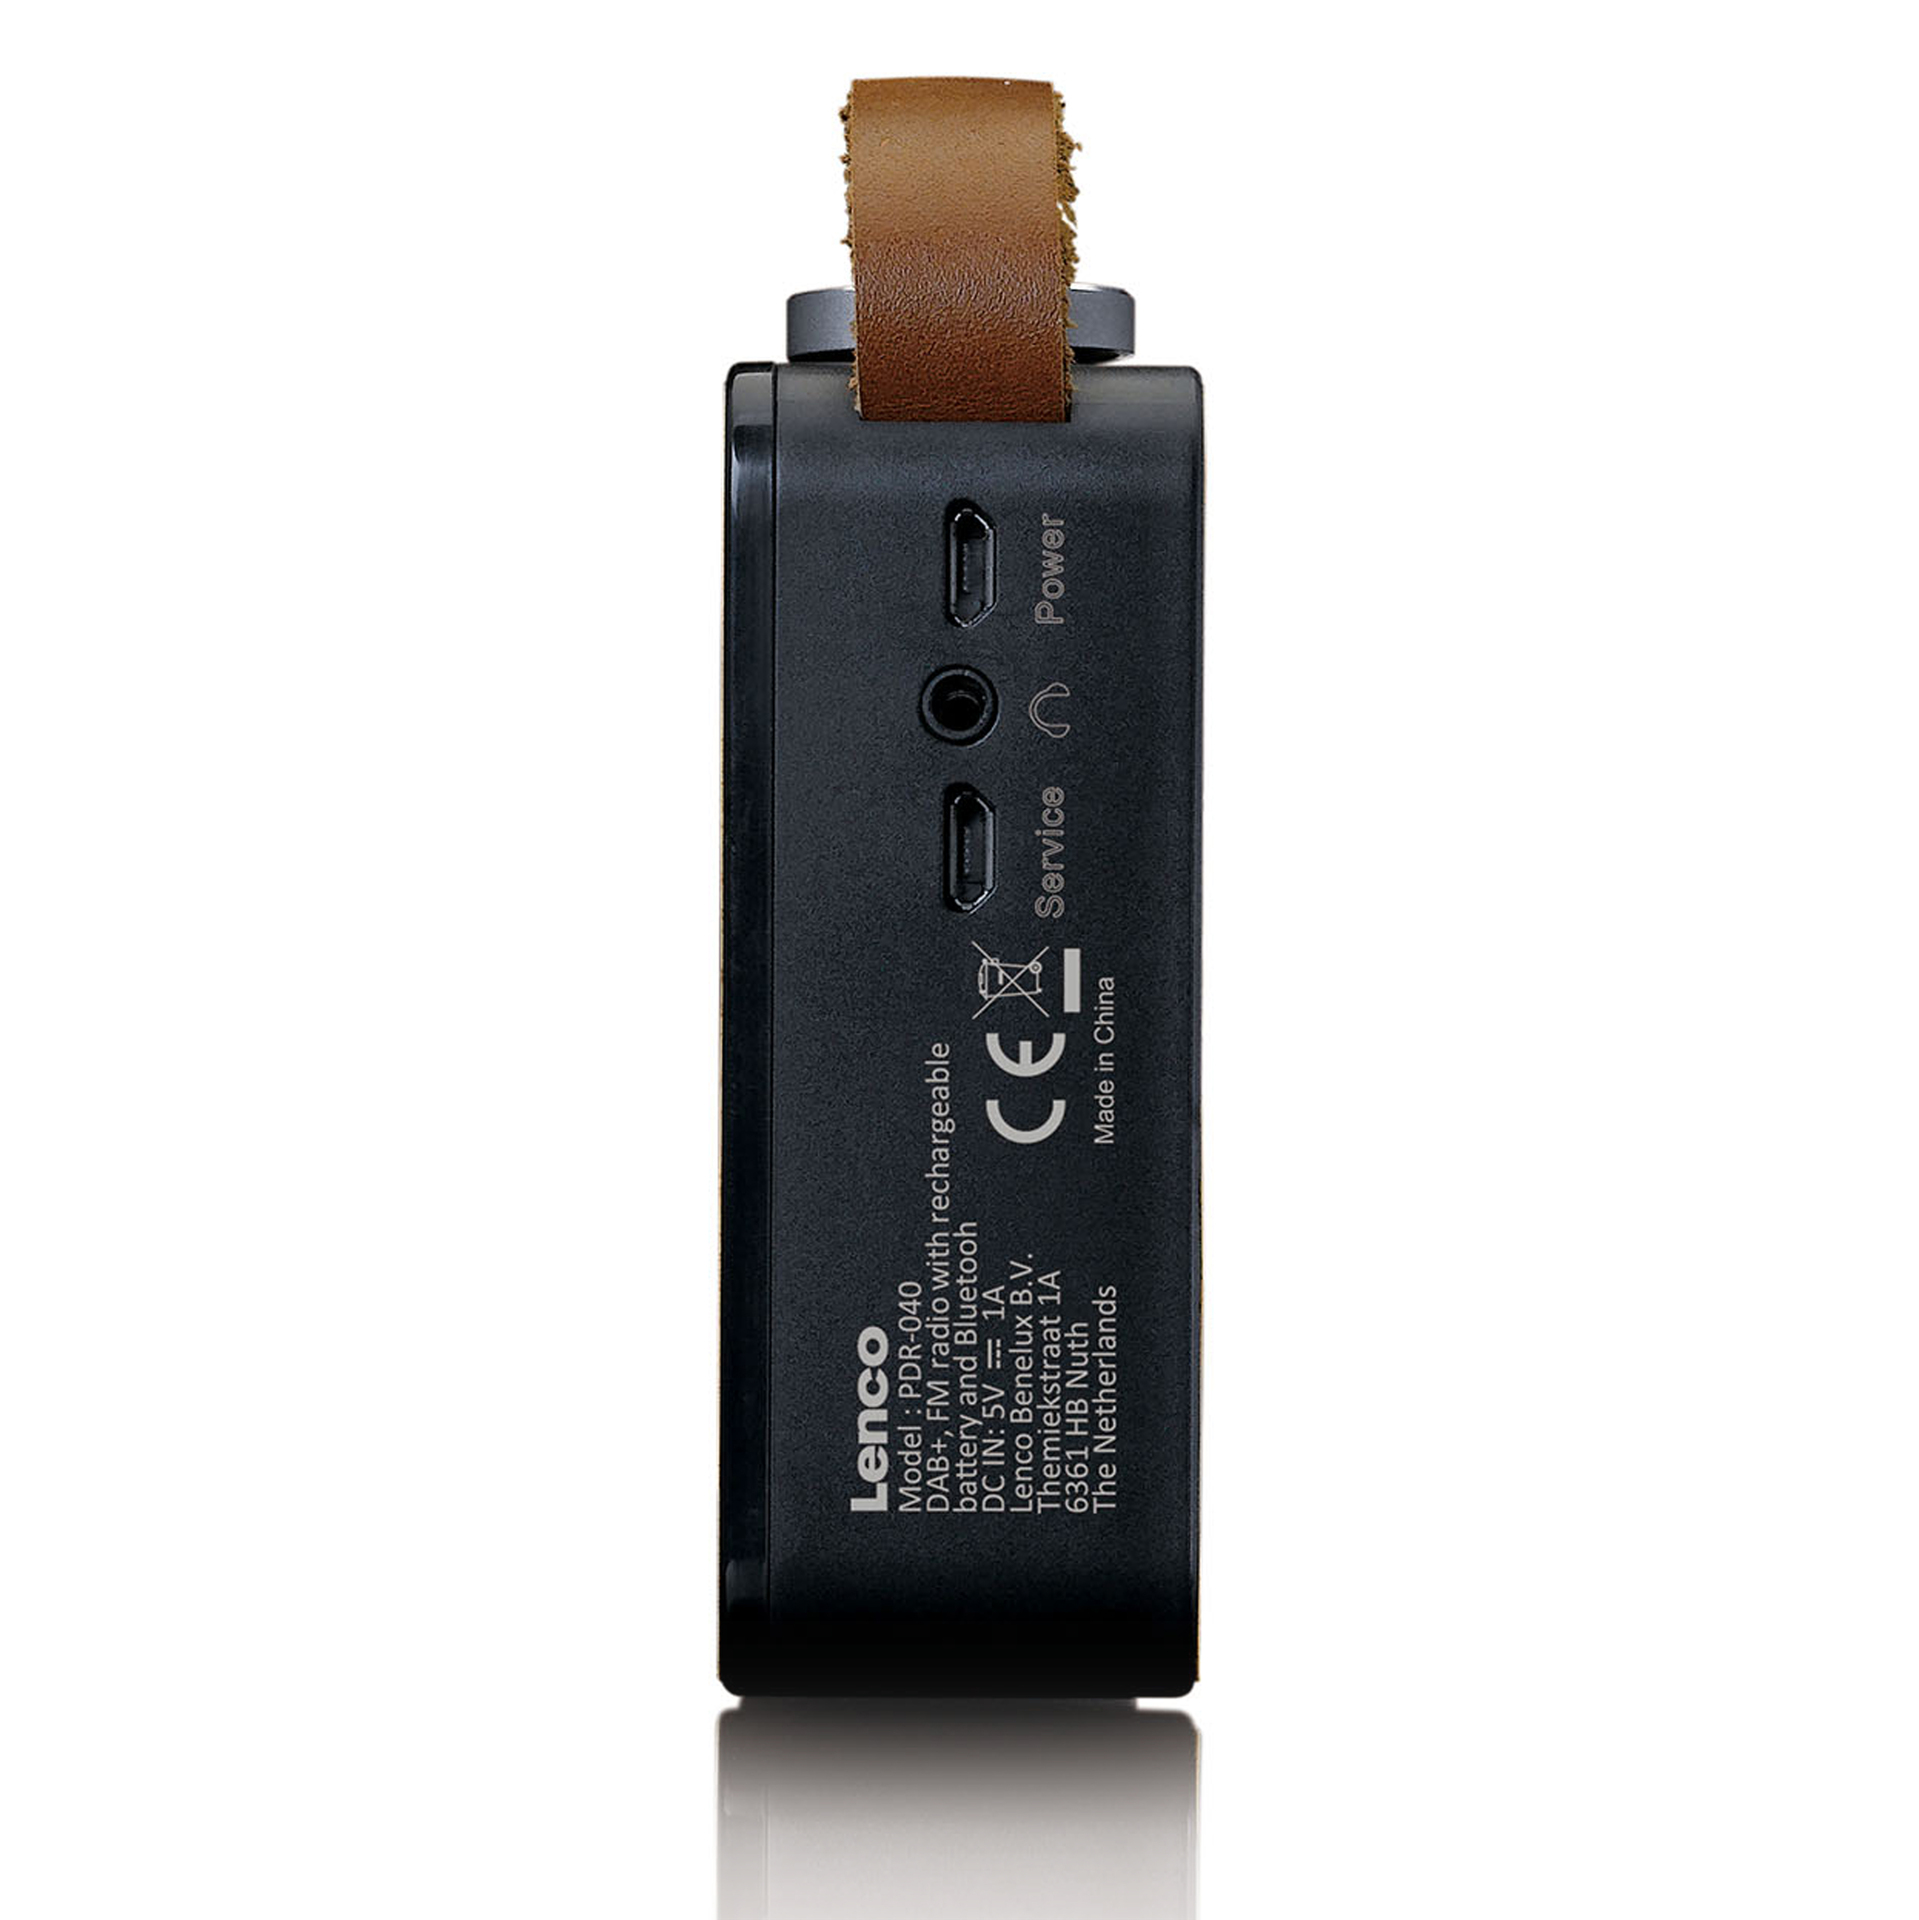 LENCO tragbares DAB+/ FM Radio schwarz aus echtem Bambus 3 Watt Bluetooth  5.0 